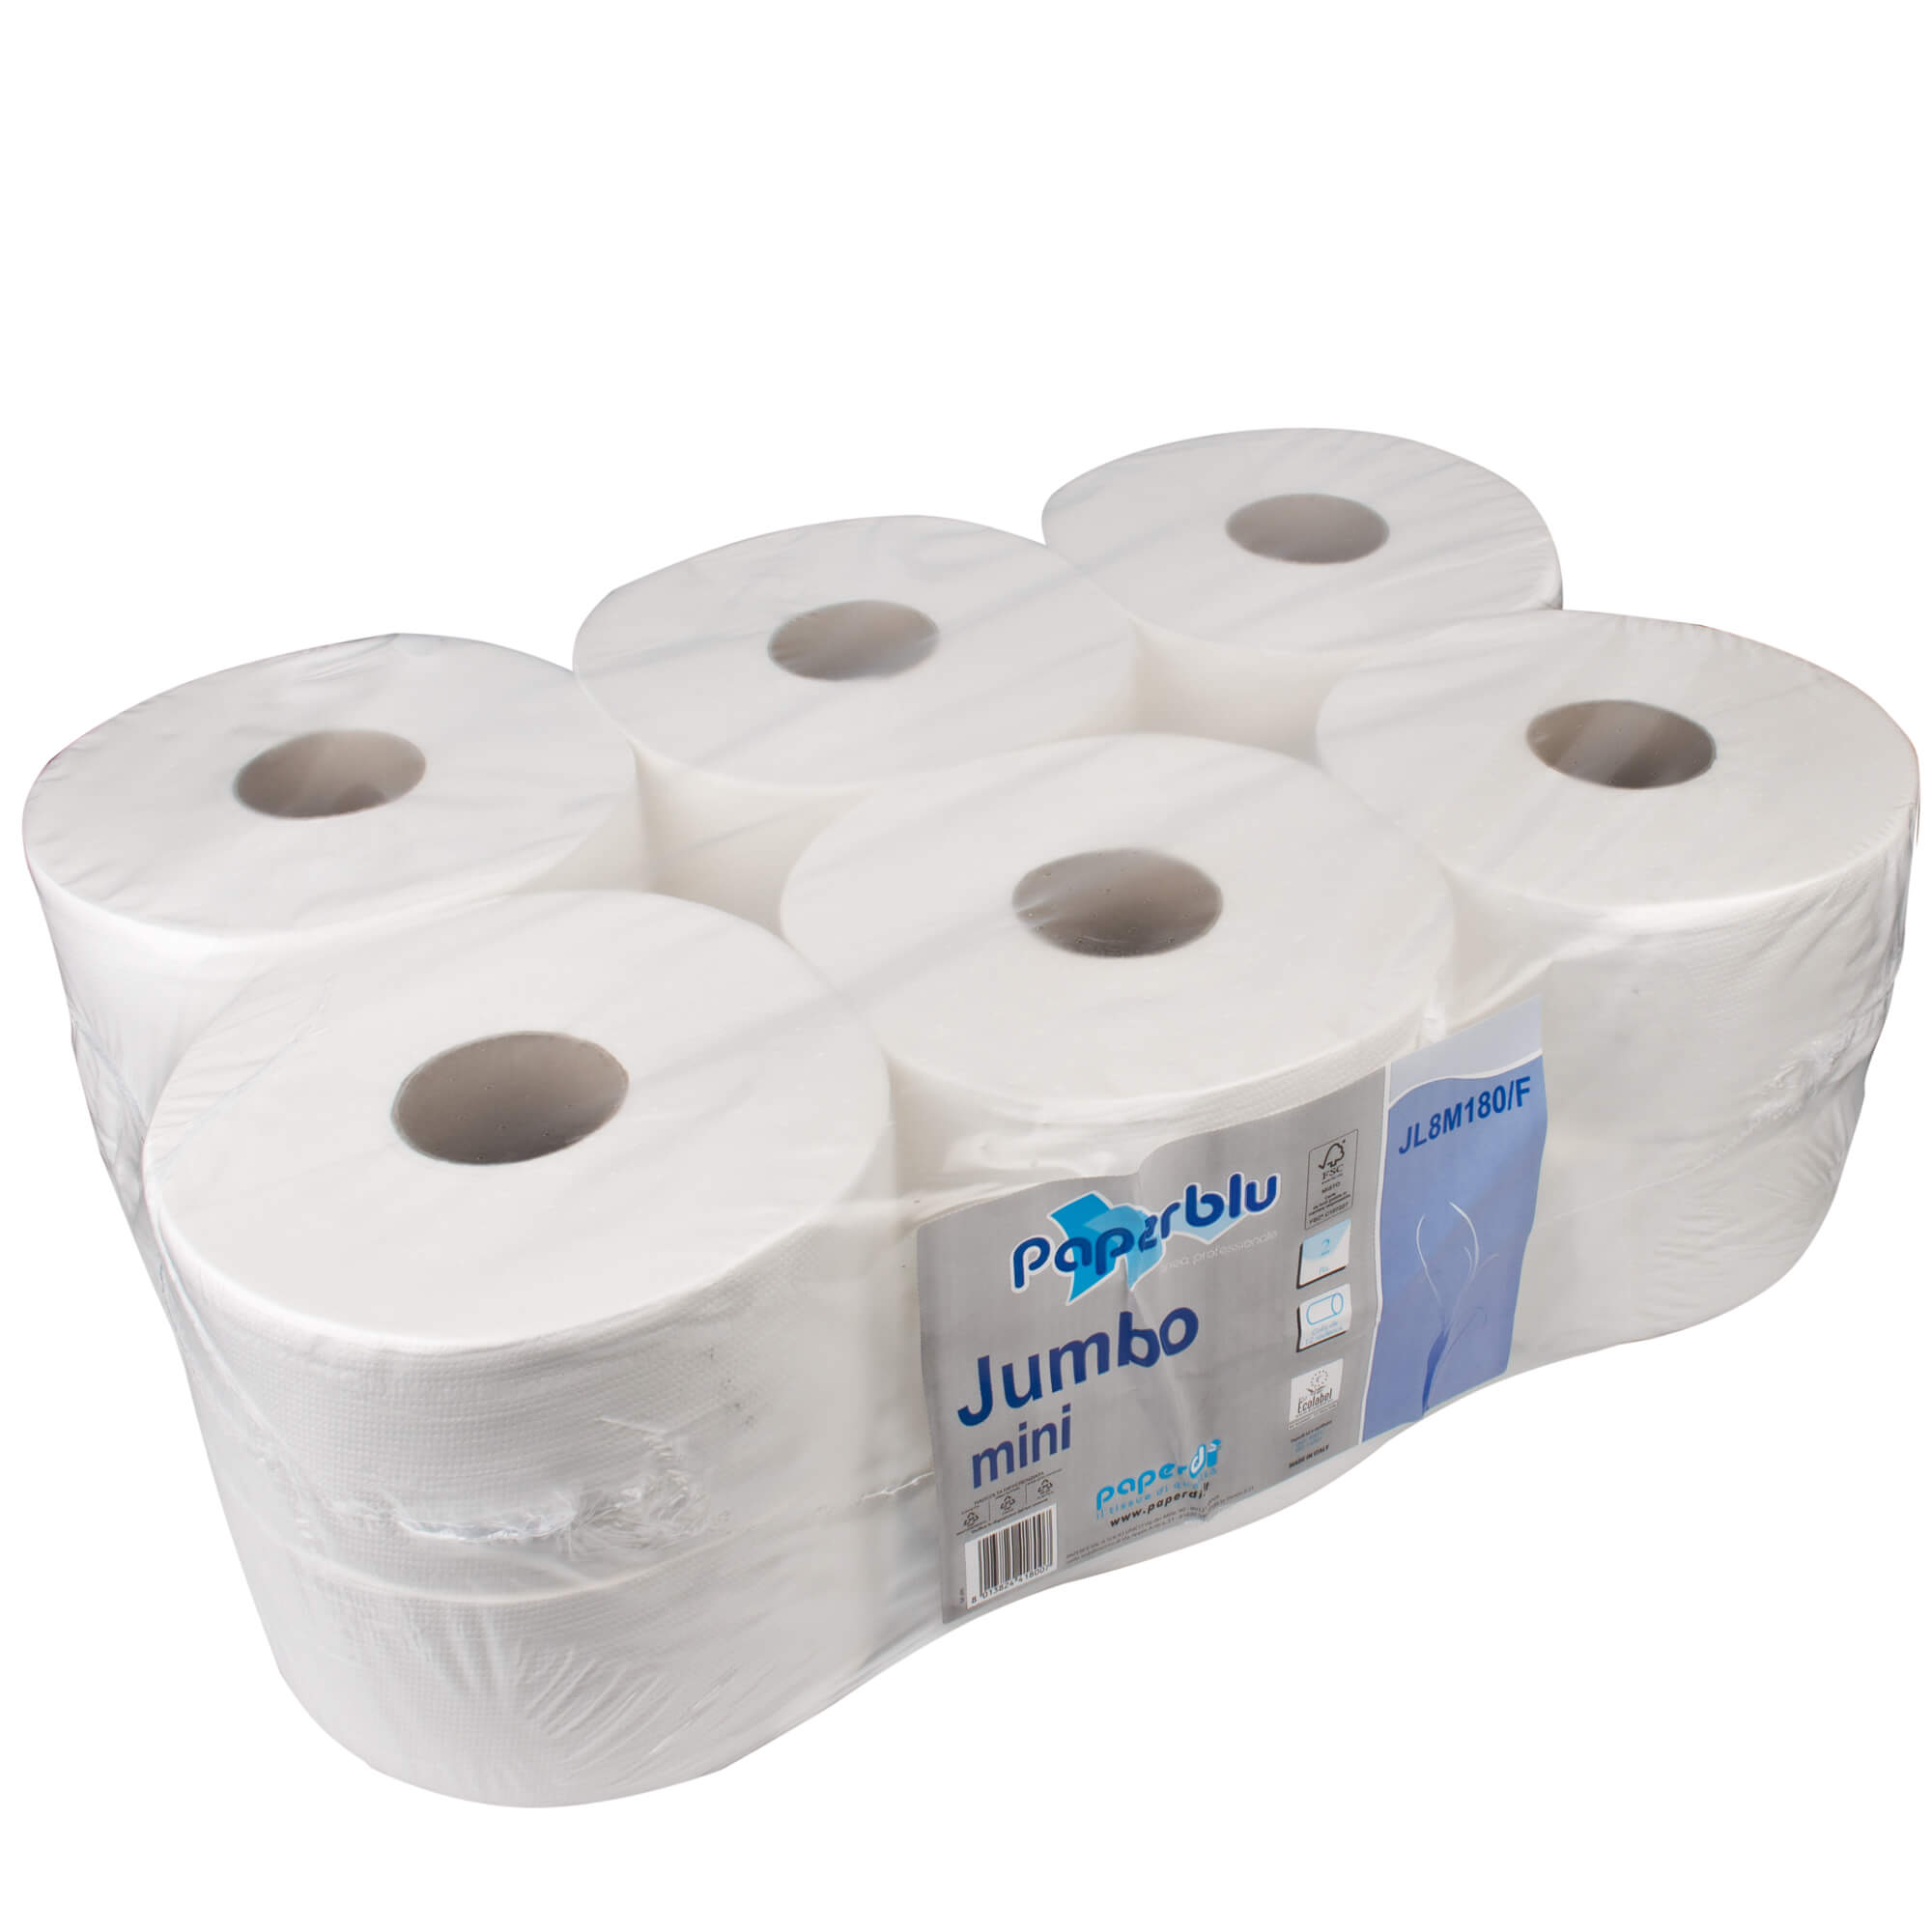 Mini jumbo toilet paper, 2ply - white (12 rolls)